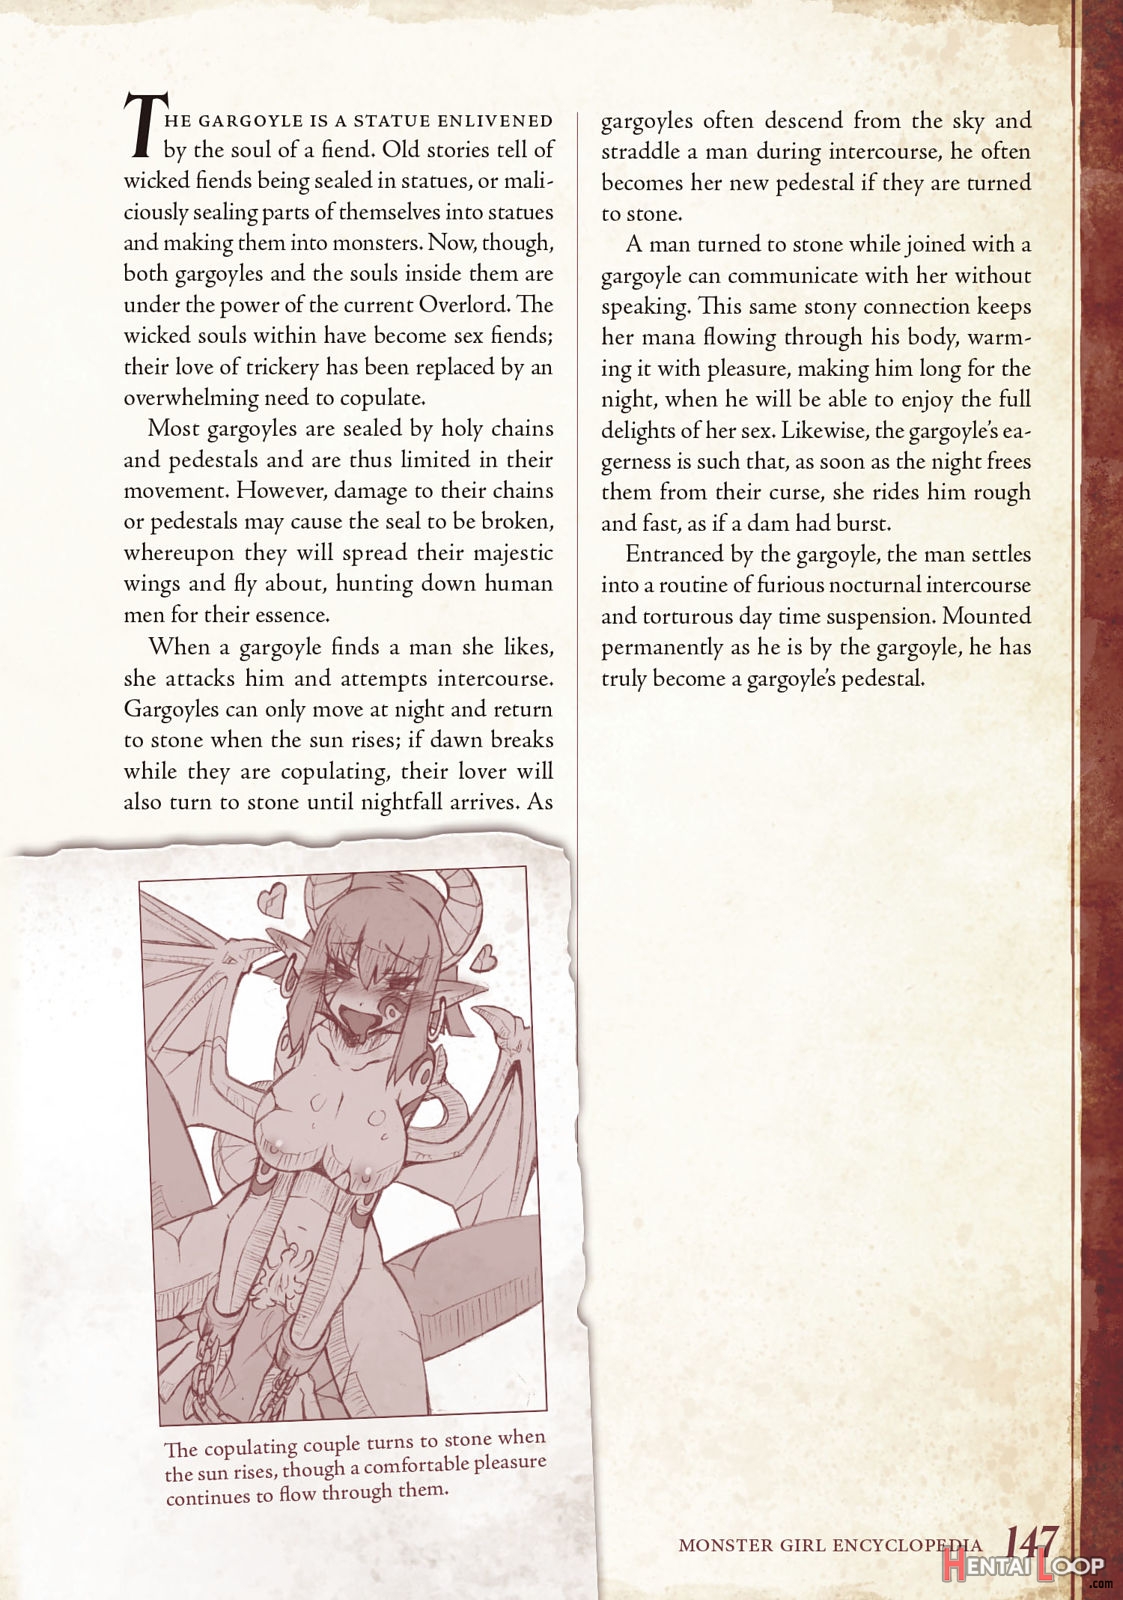 Monster Girl Encyclopedia Vol. 1 page 148